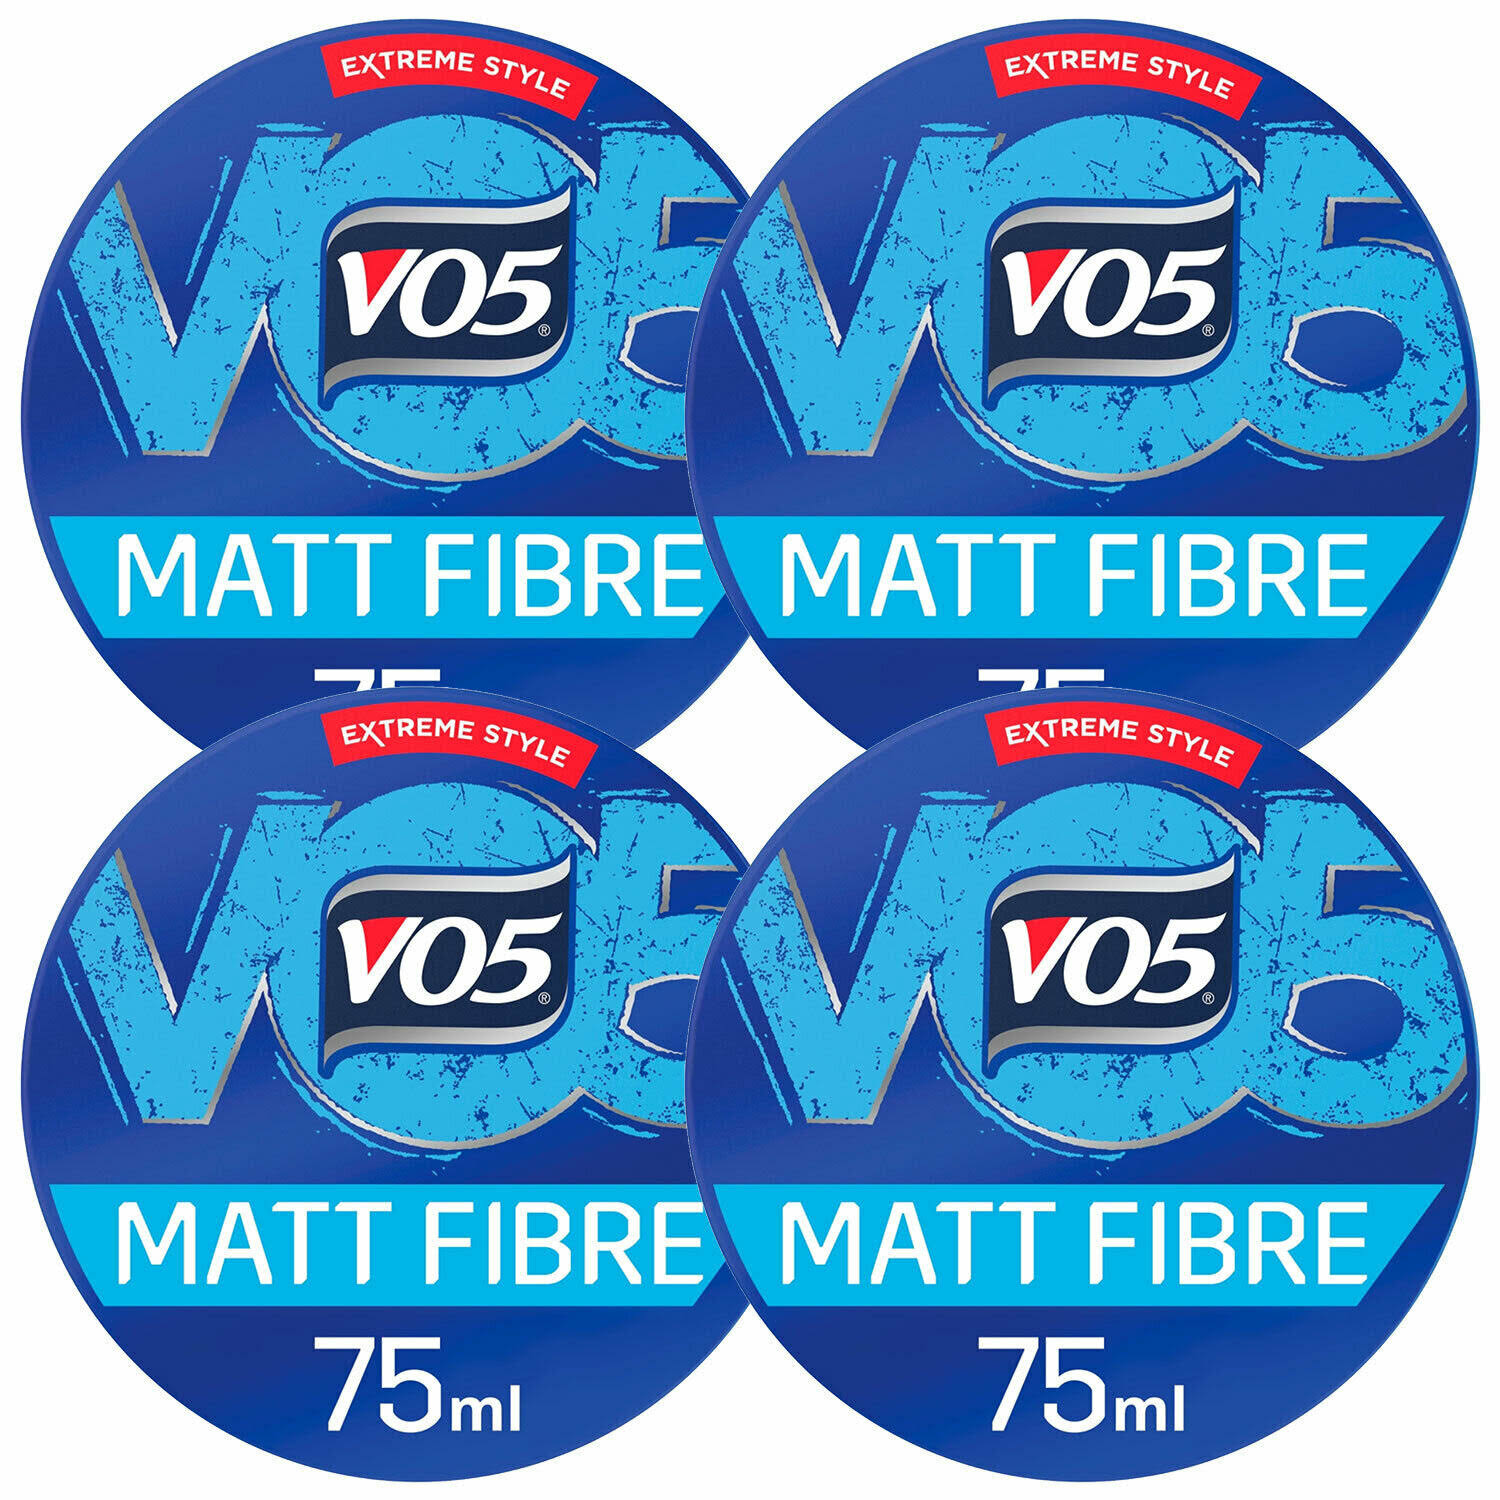 VO5 Extreme Style Matt Fibre - 75ml